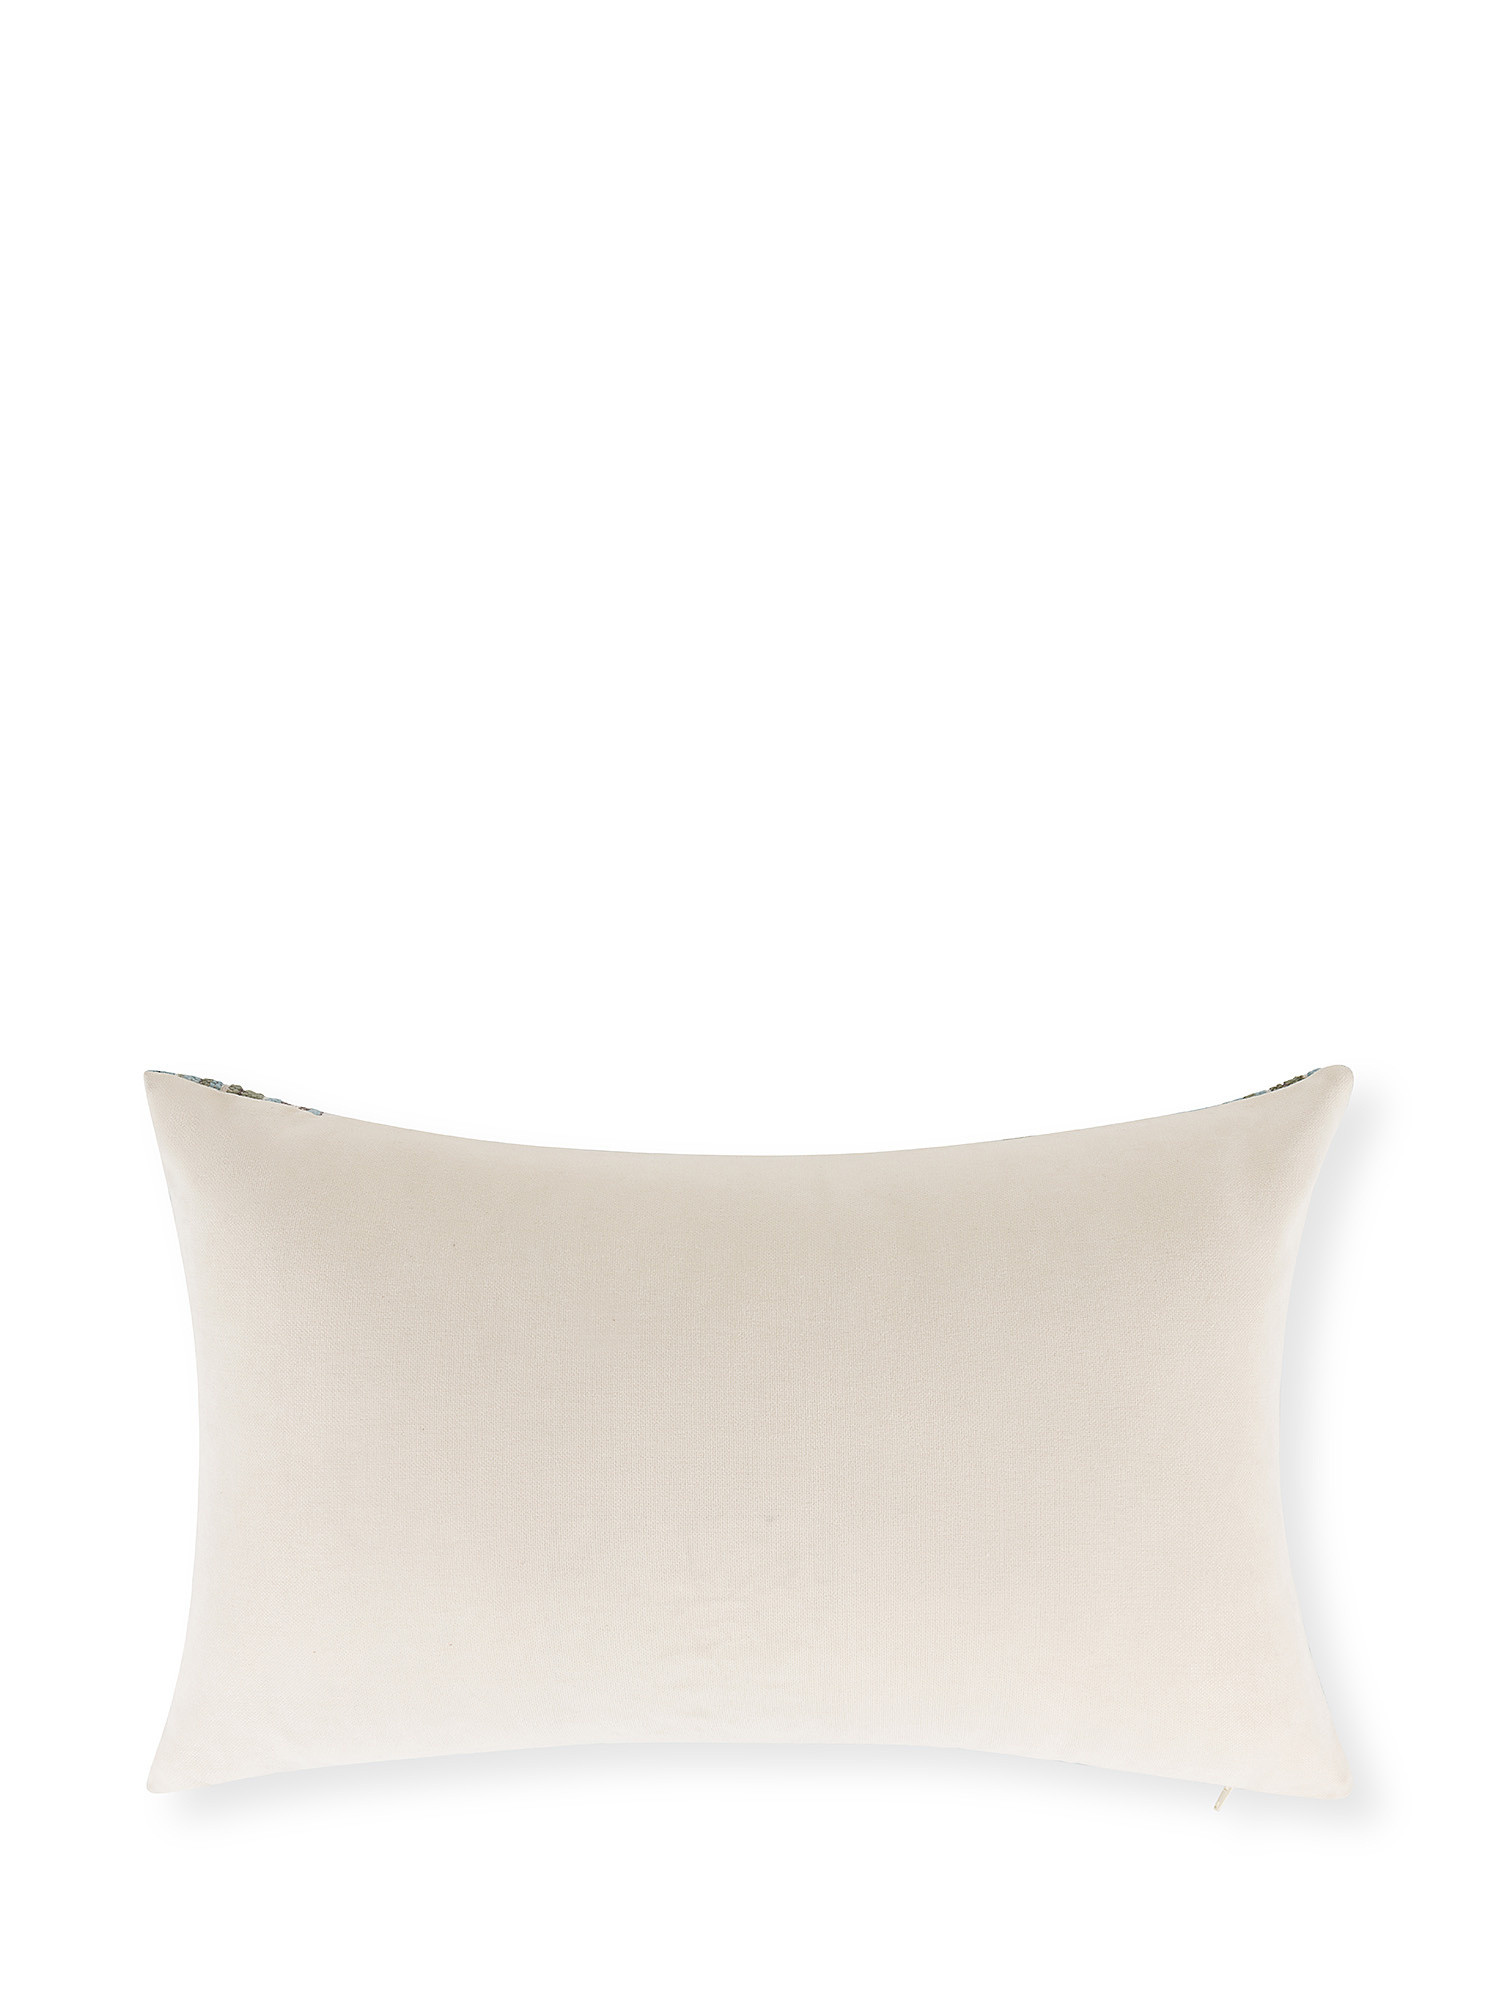 Striped jacquard chenille cushion 35x55cm, Light Blue, large image number 1